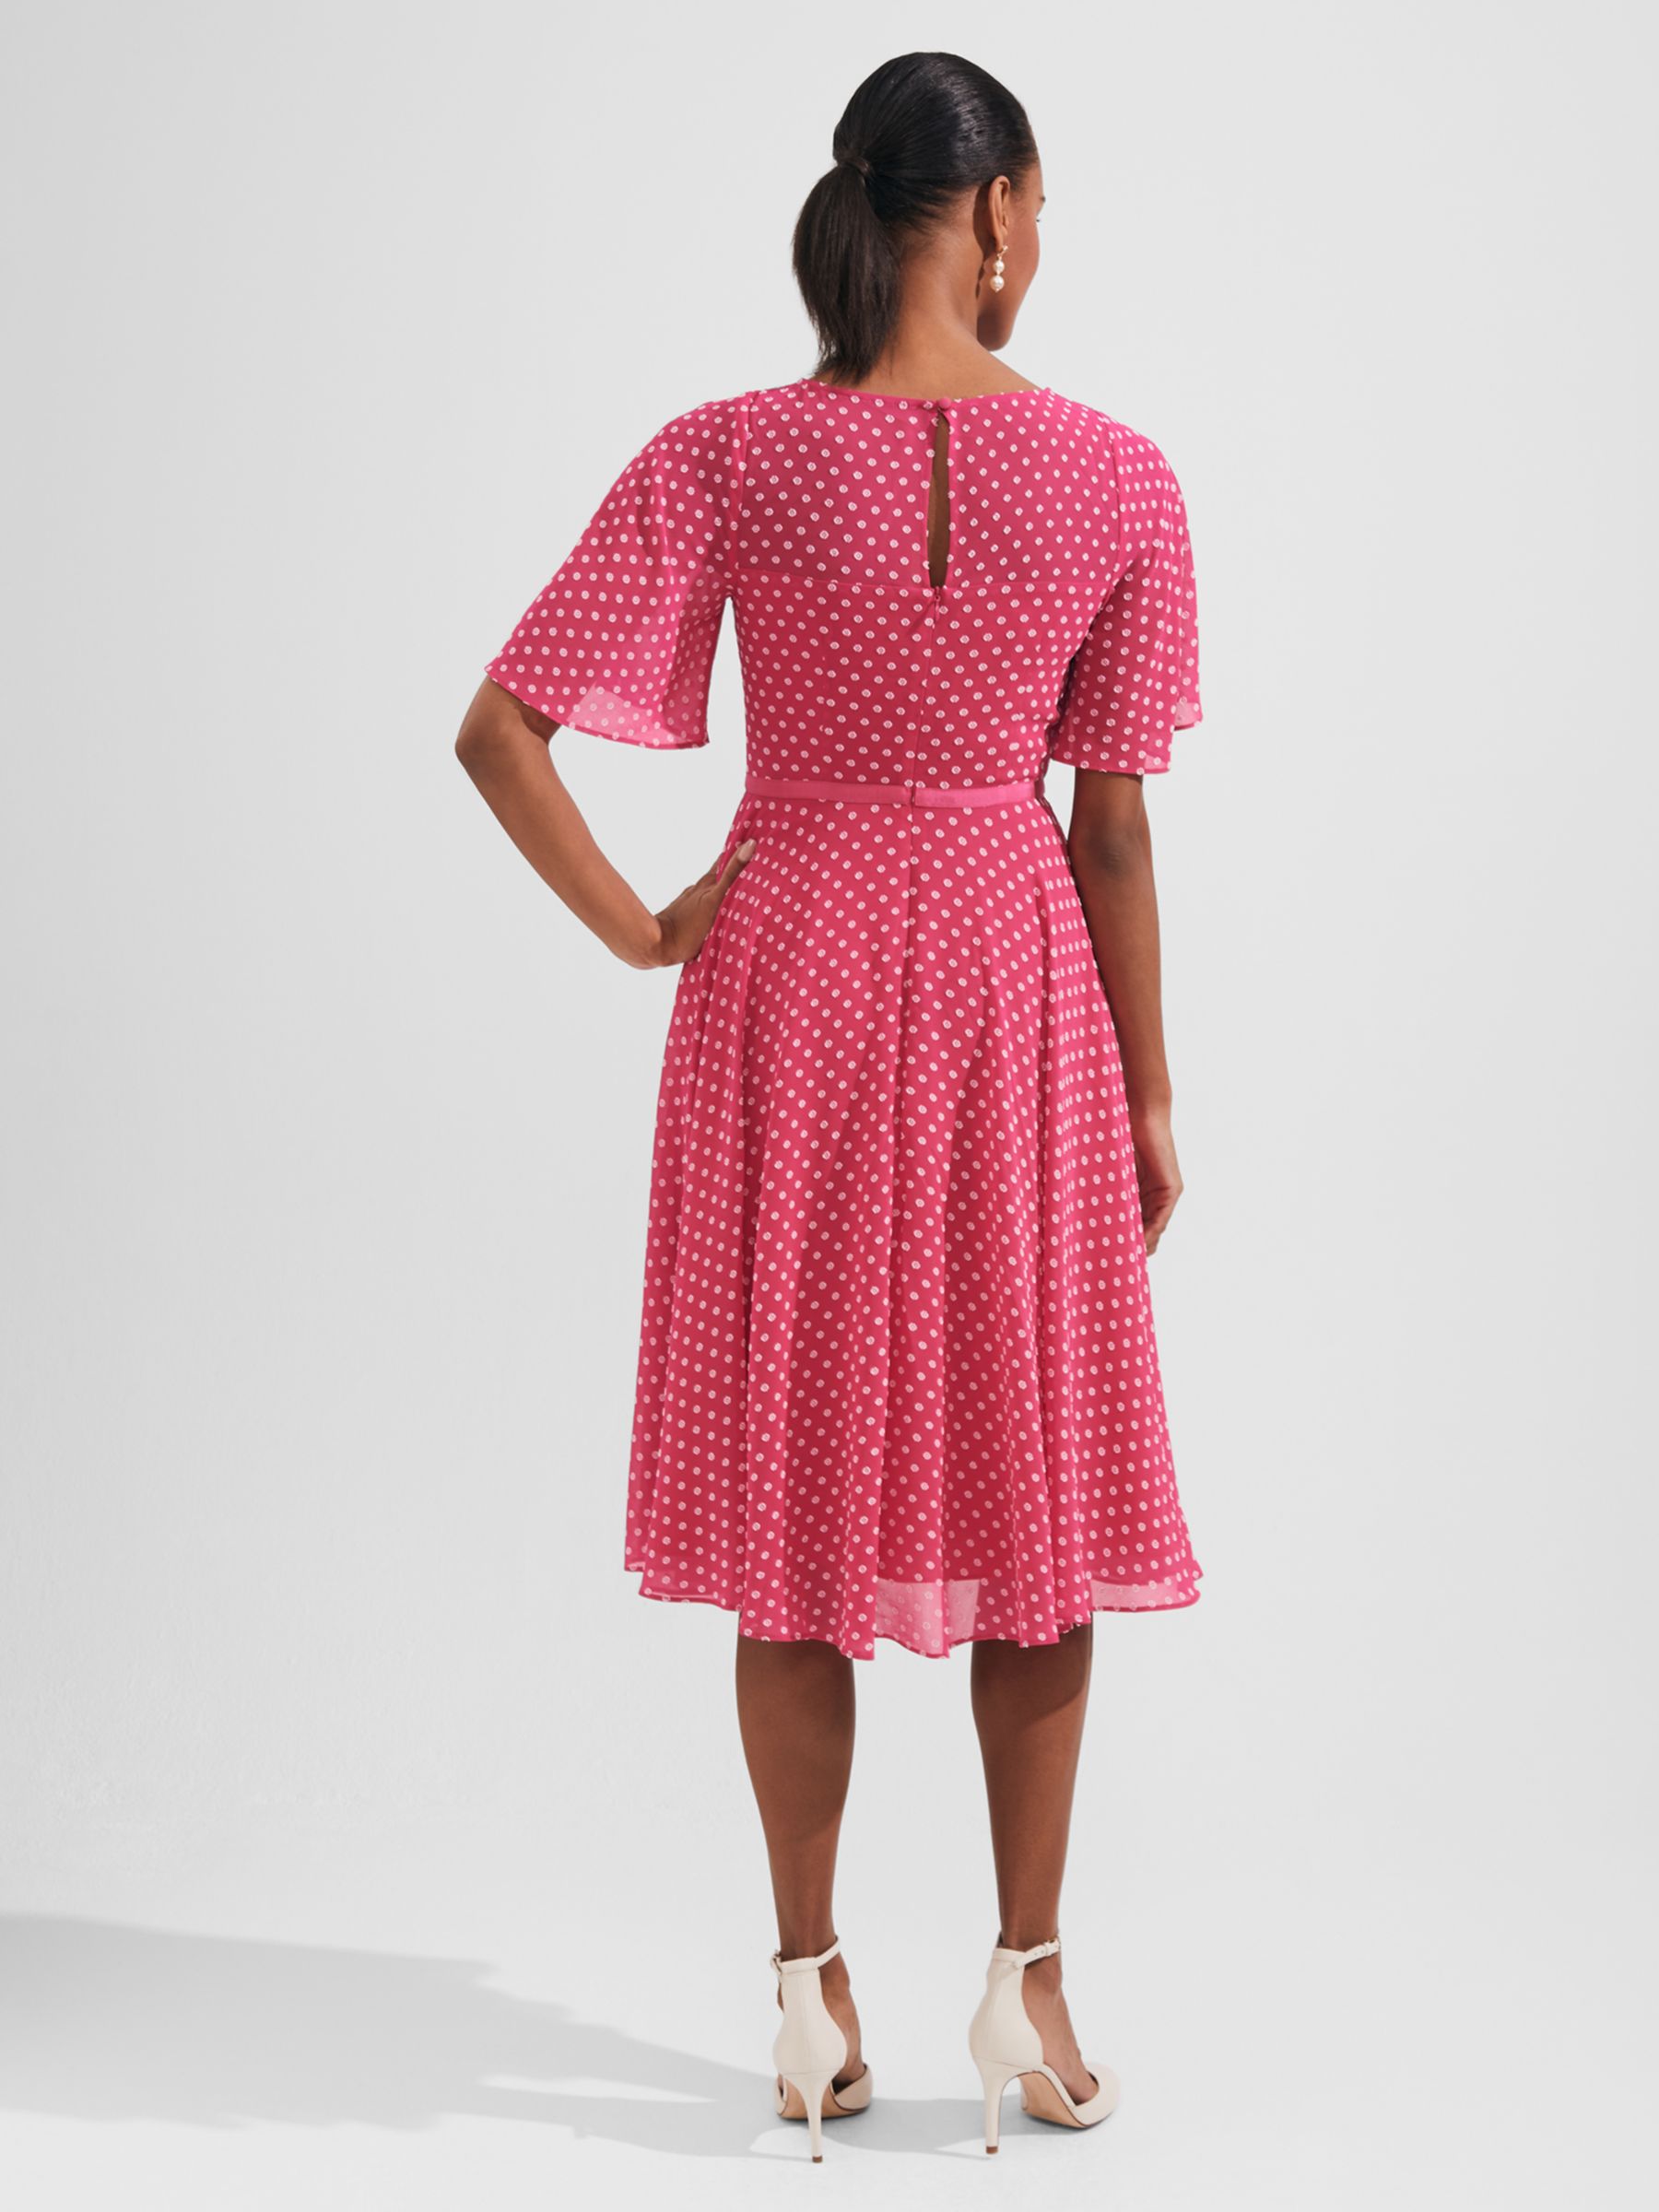 Hobbs Petite Eleanor Dress, Pink/White at John Lewis & Partners